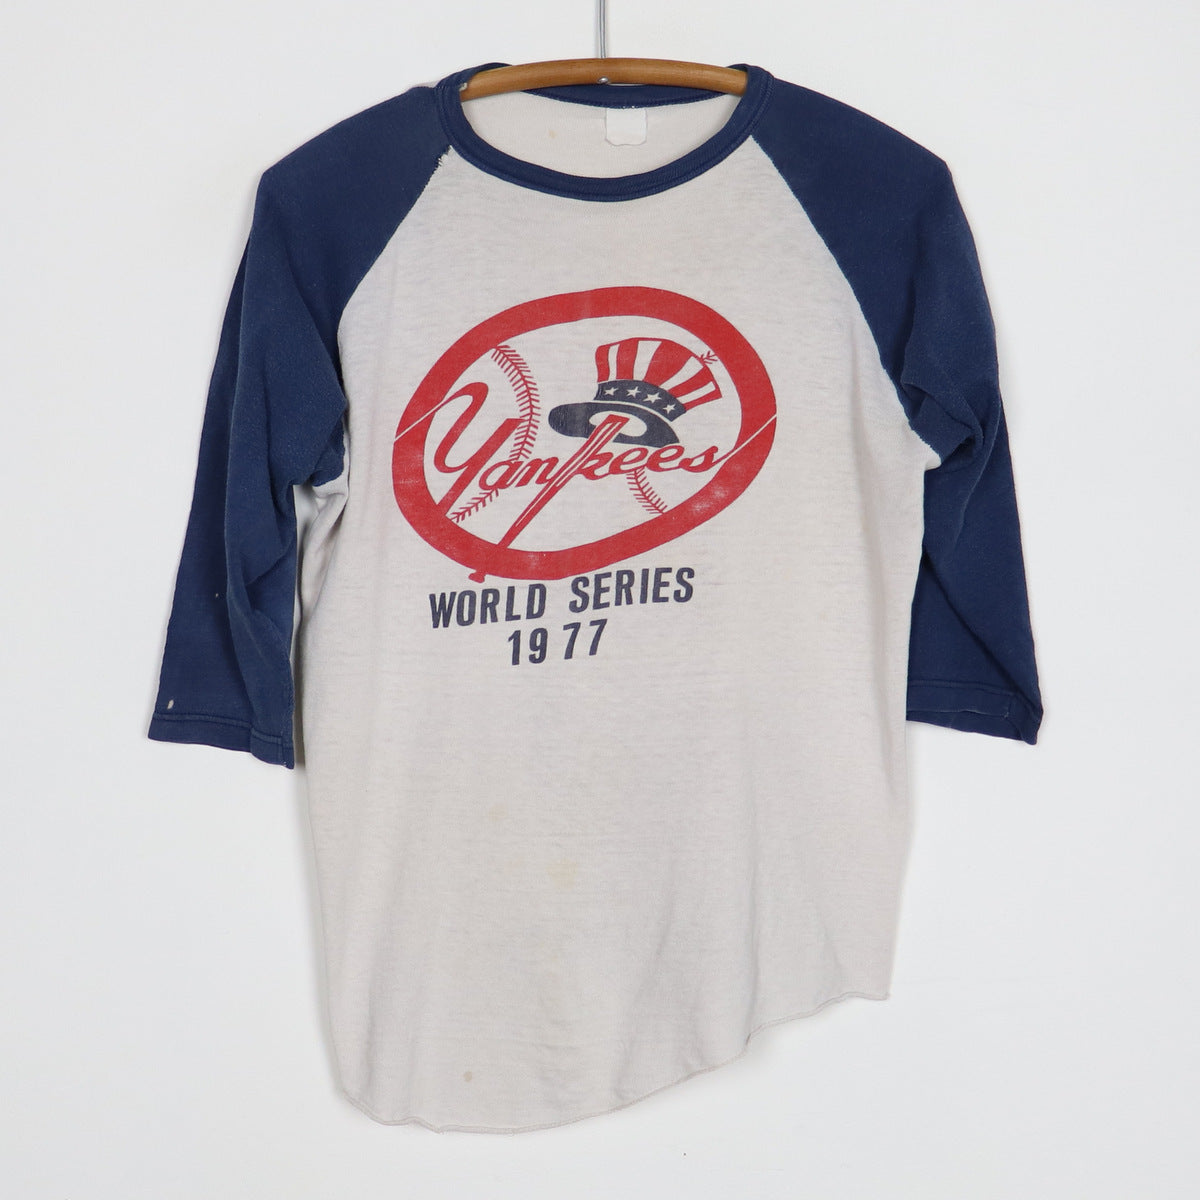 New Era Yankees Champs T-Shirt